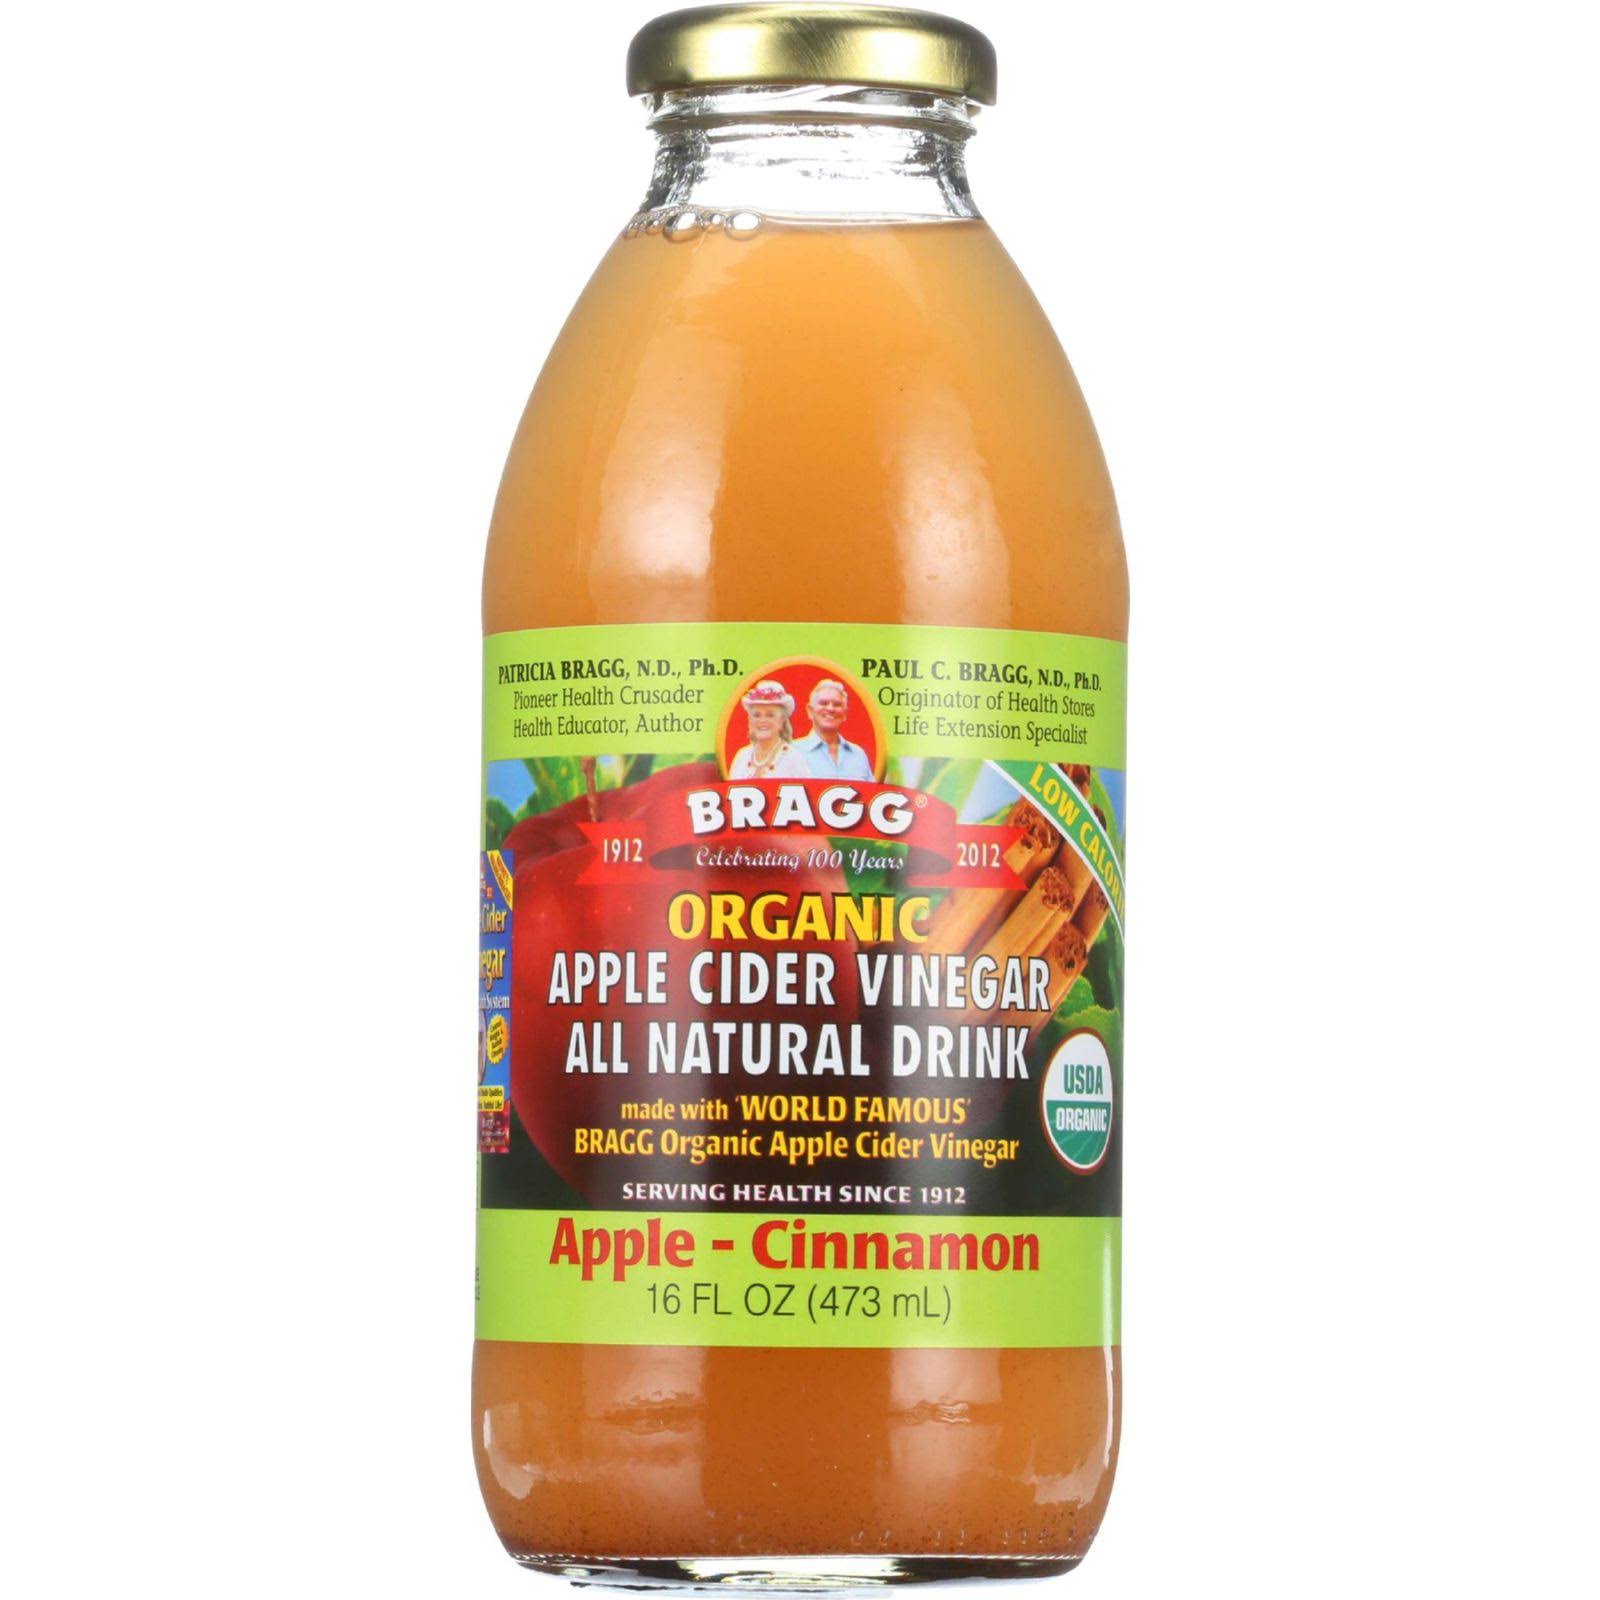 Bragg Apple Cider Vinegar & Apple Cinnamon Drink 473ml